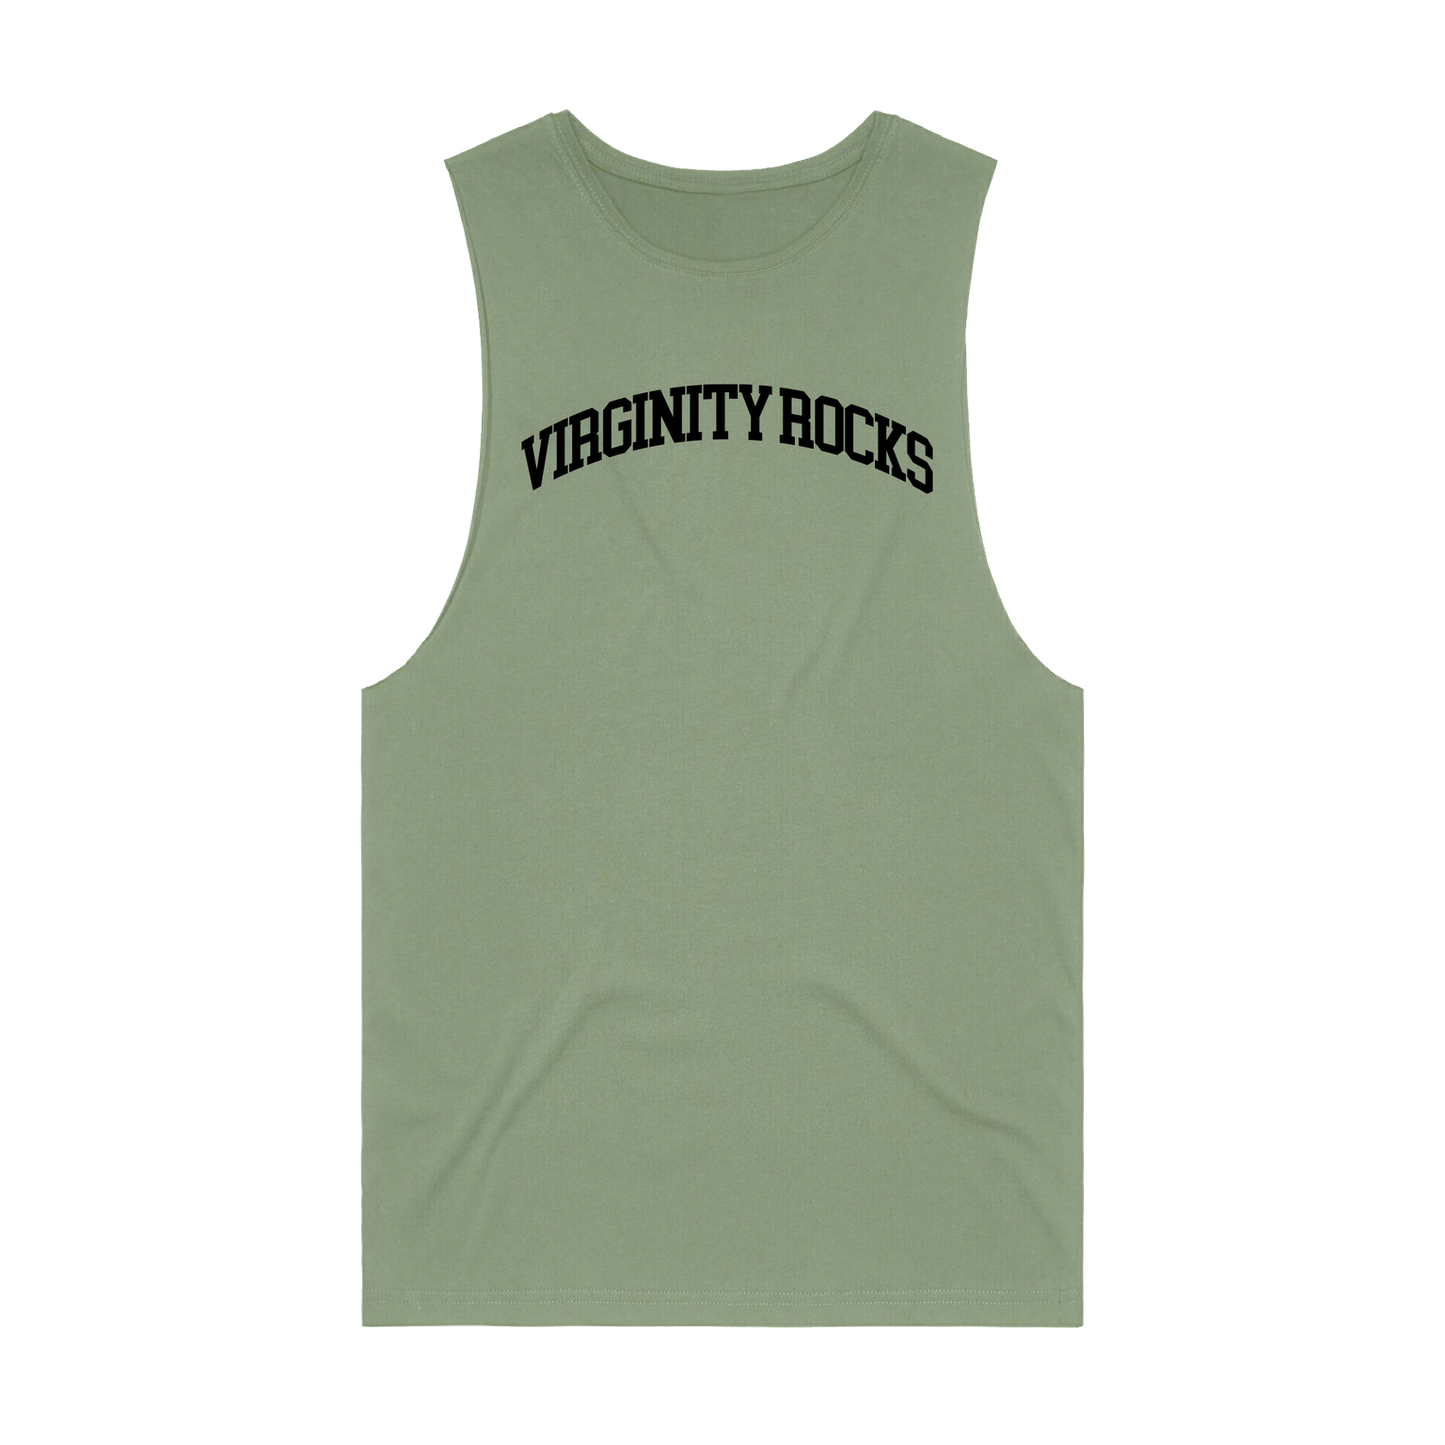 Virginity Rocks Sleeveless Pine Tank